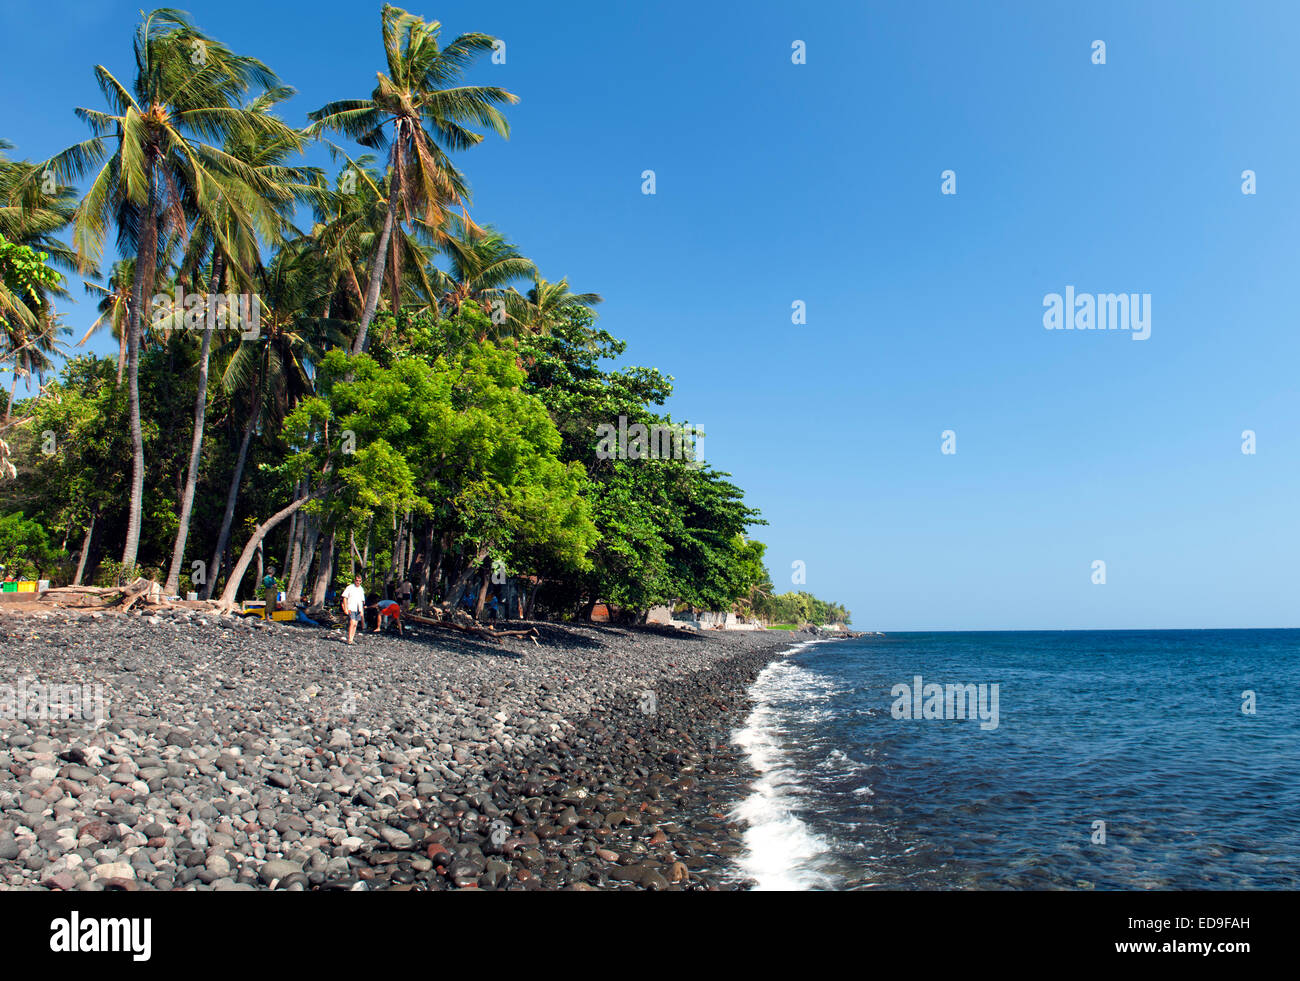 The rocky beach at Tulamben near Amed on the northeastern coast of Bali, Indonesia. Stock Photo